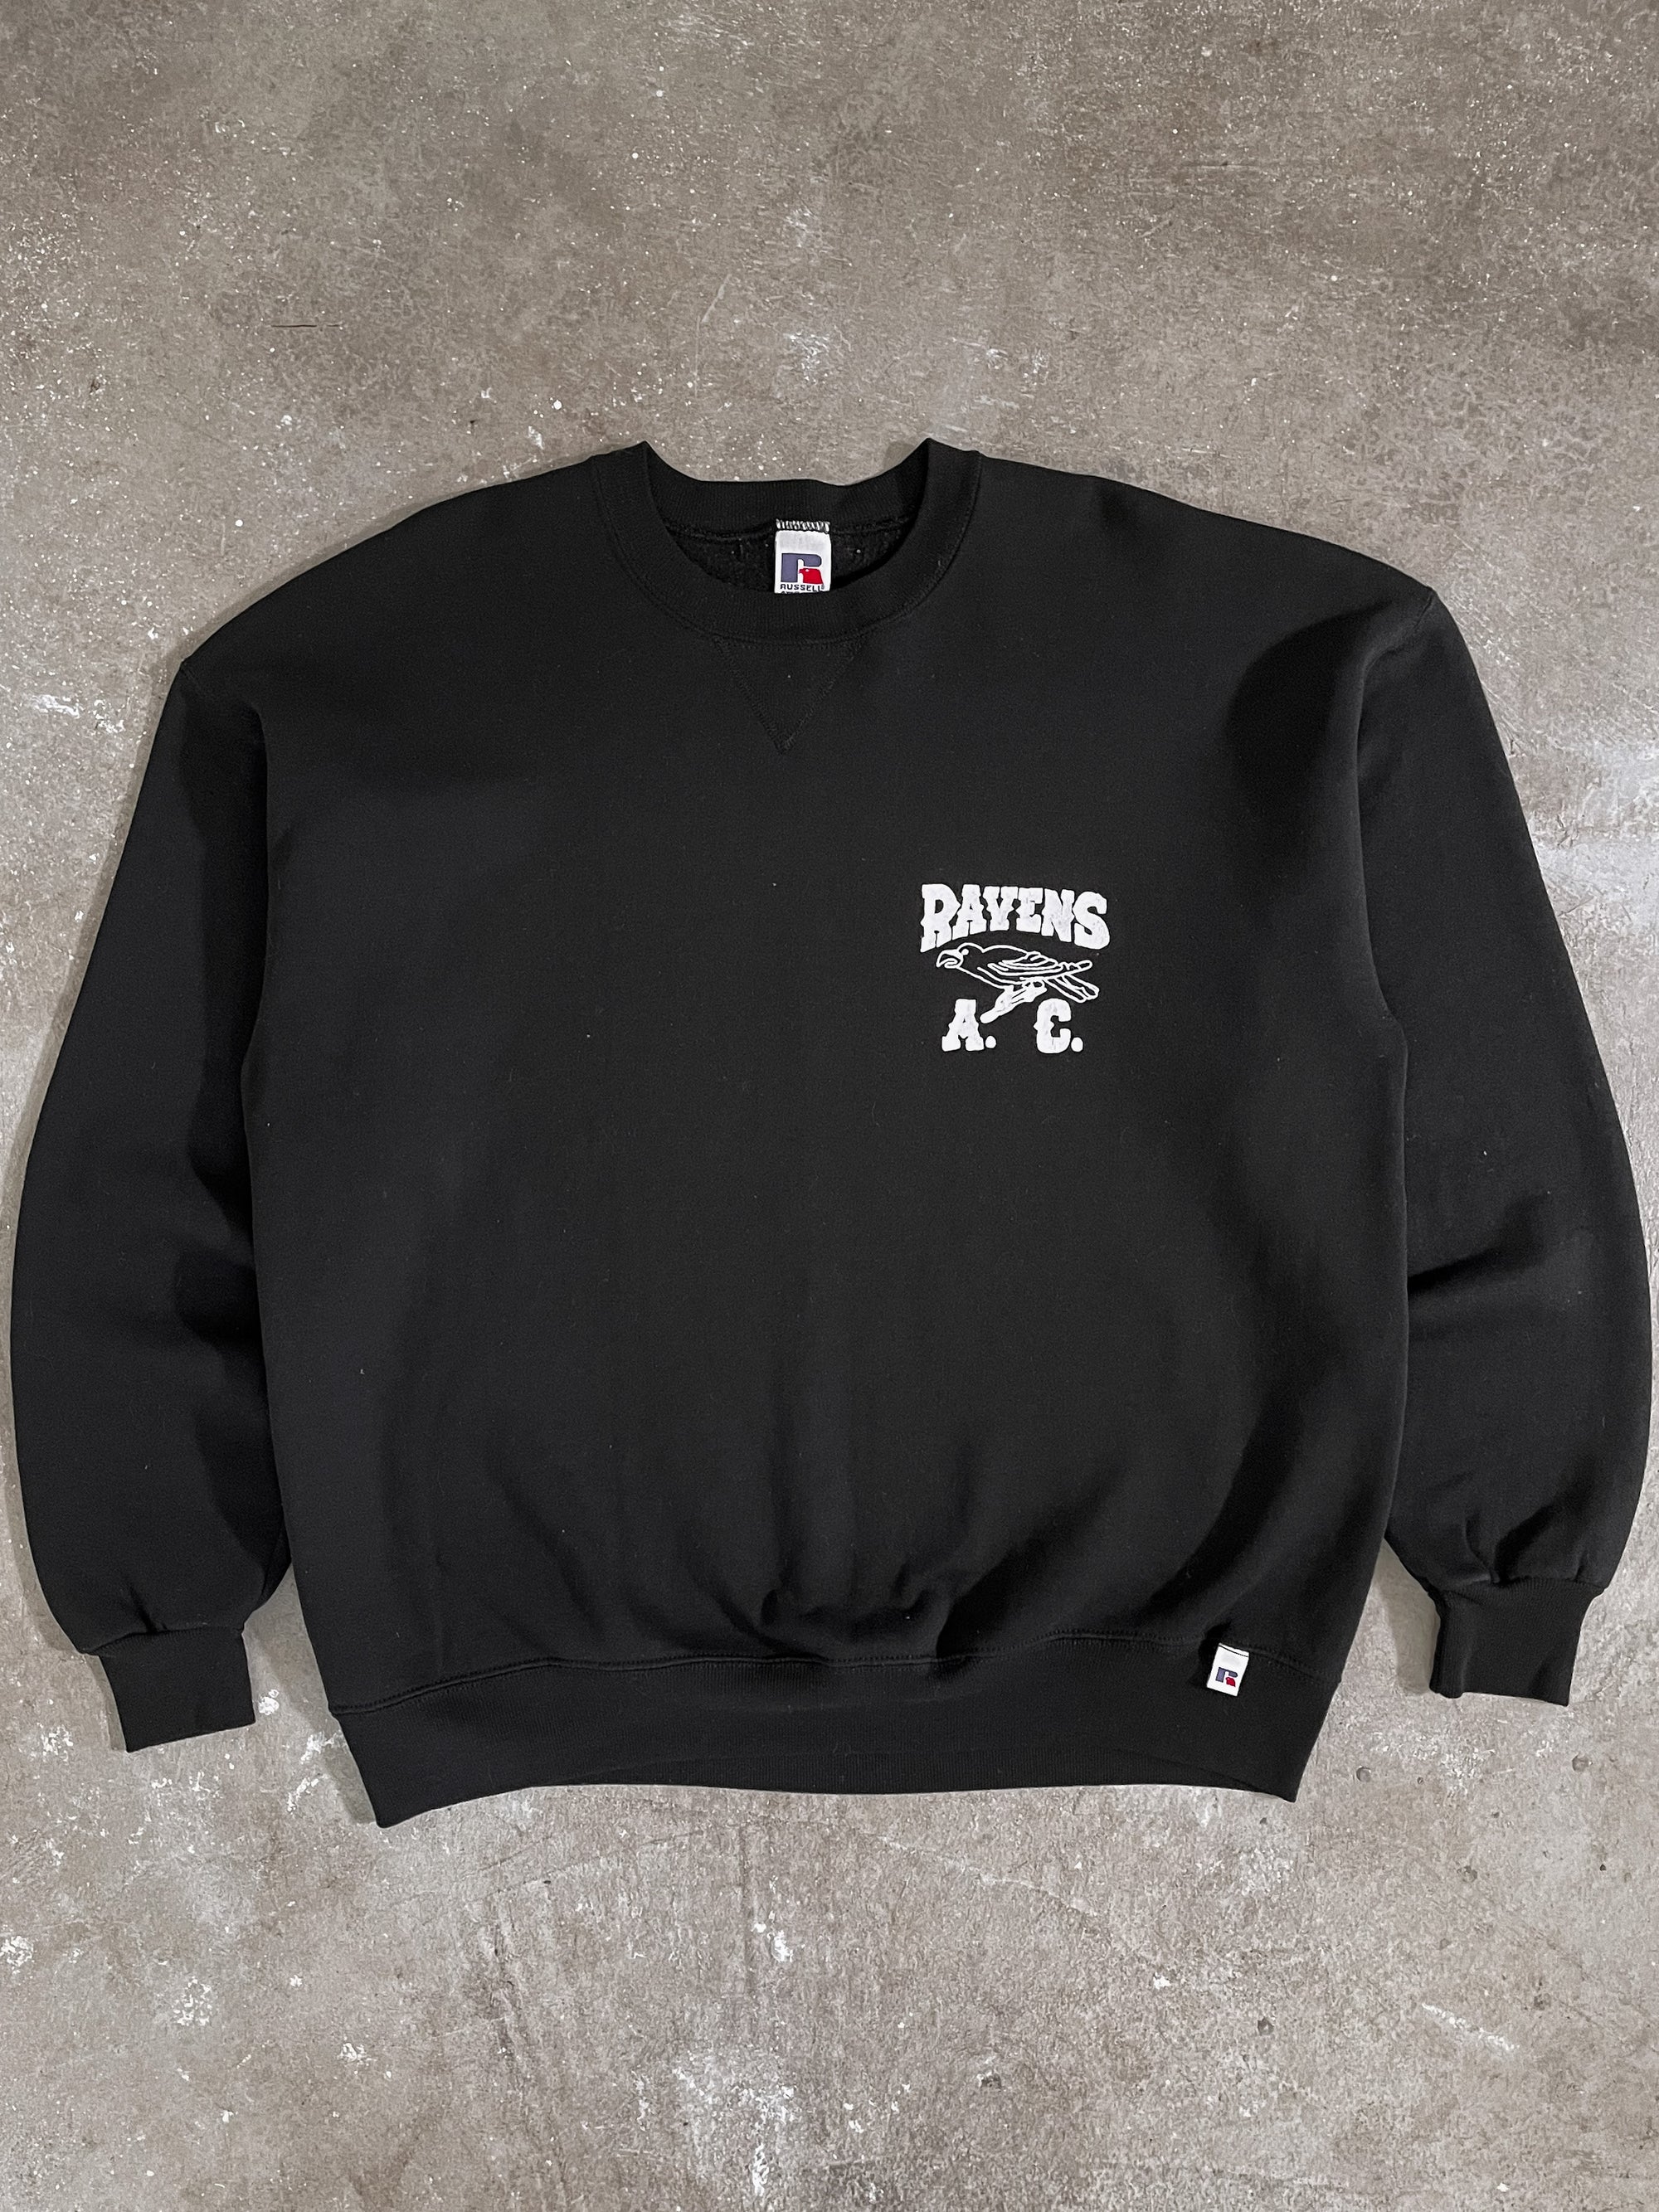 1990s Russell “Ravens A.C.” Sweatshirt (XL)